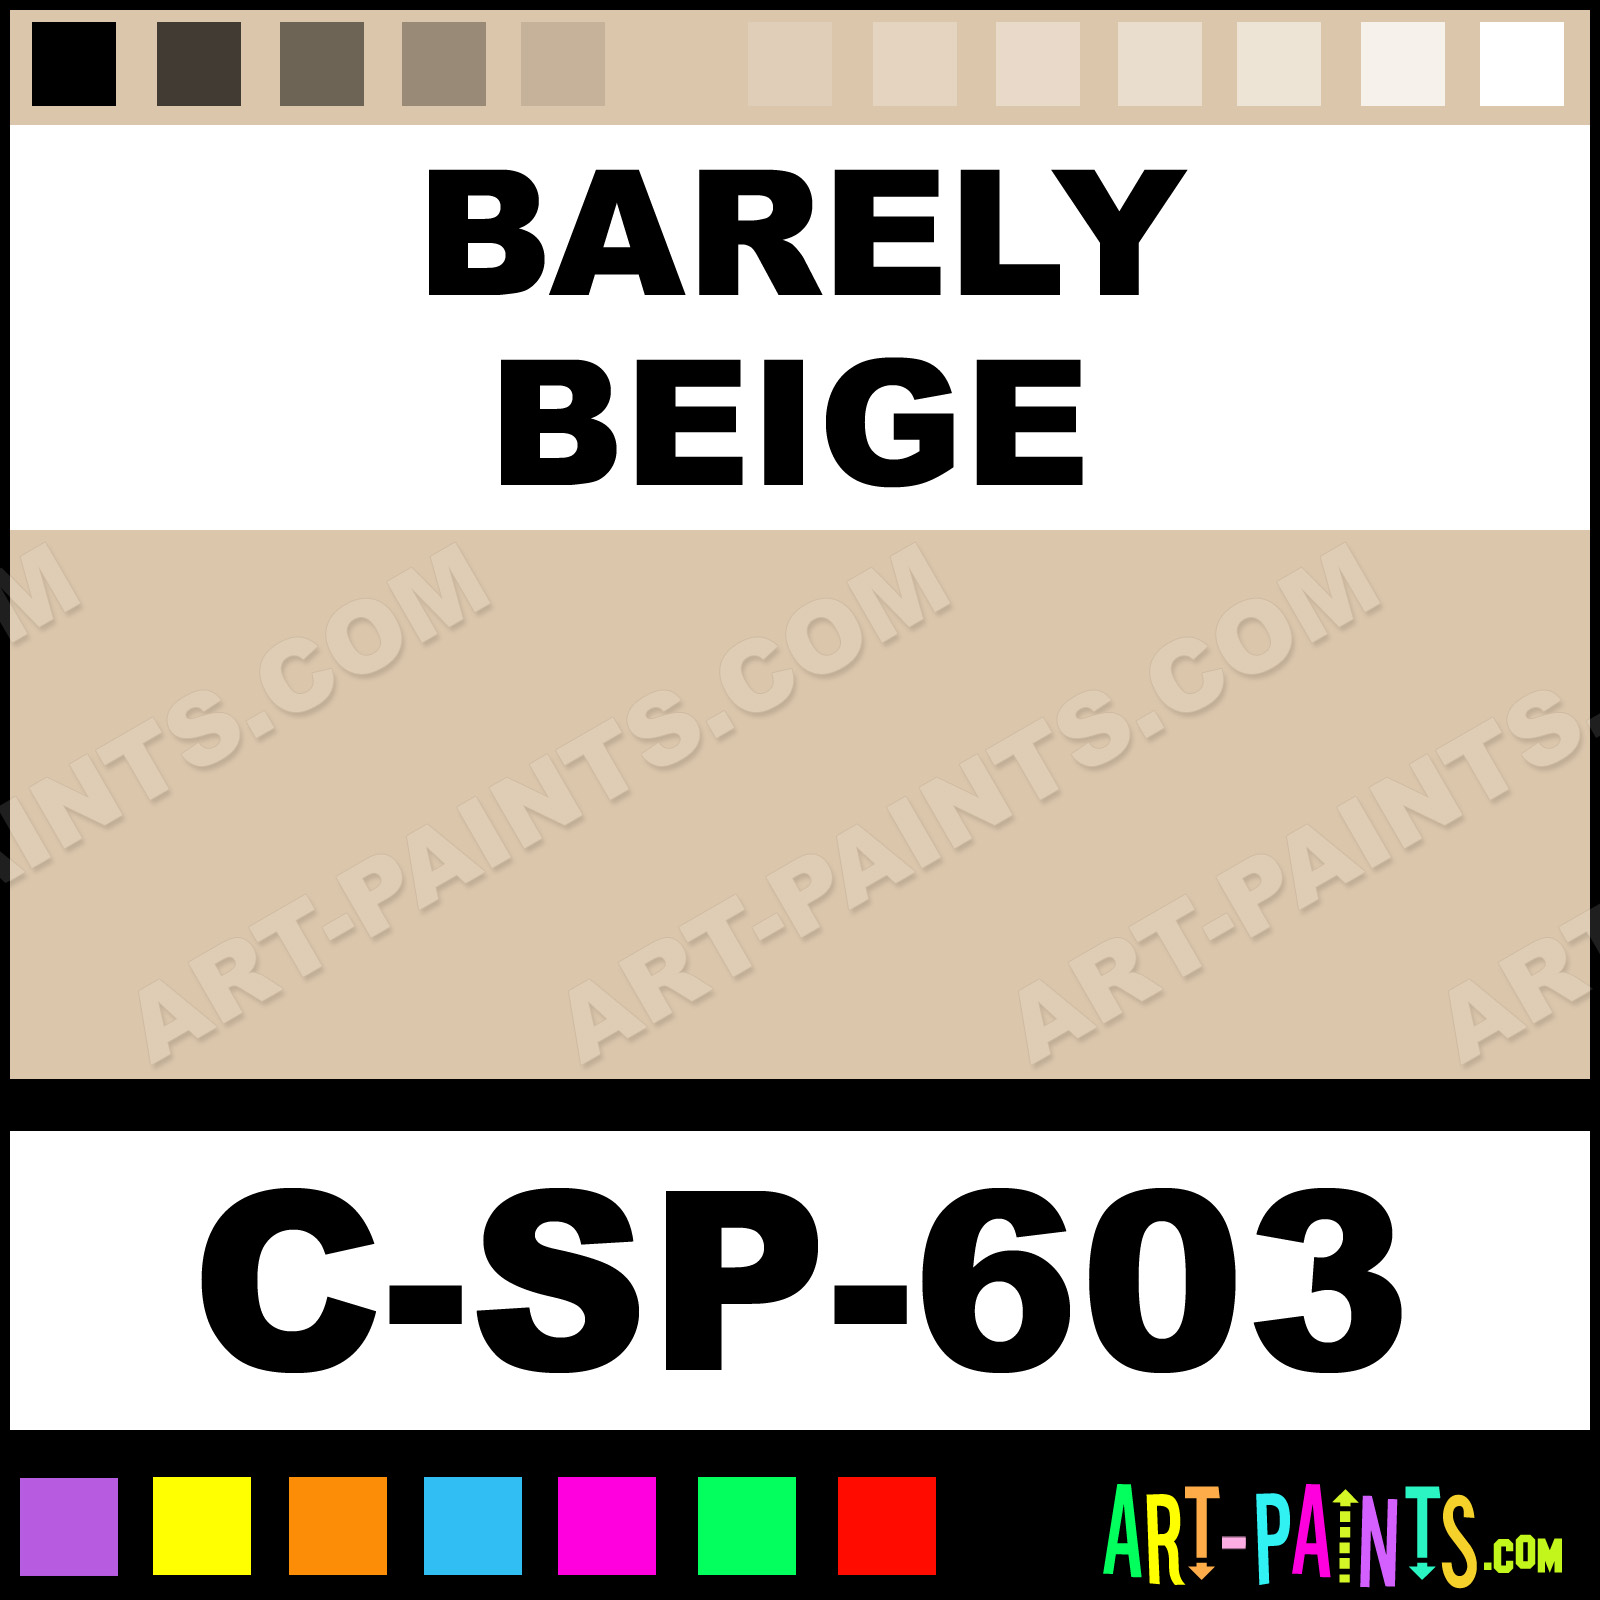 Barely Beige 600 Series Underglaze Ceramic Paints - C-SP-603